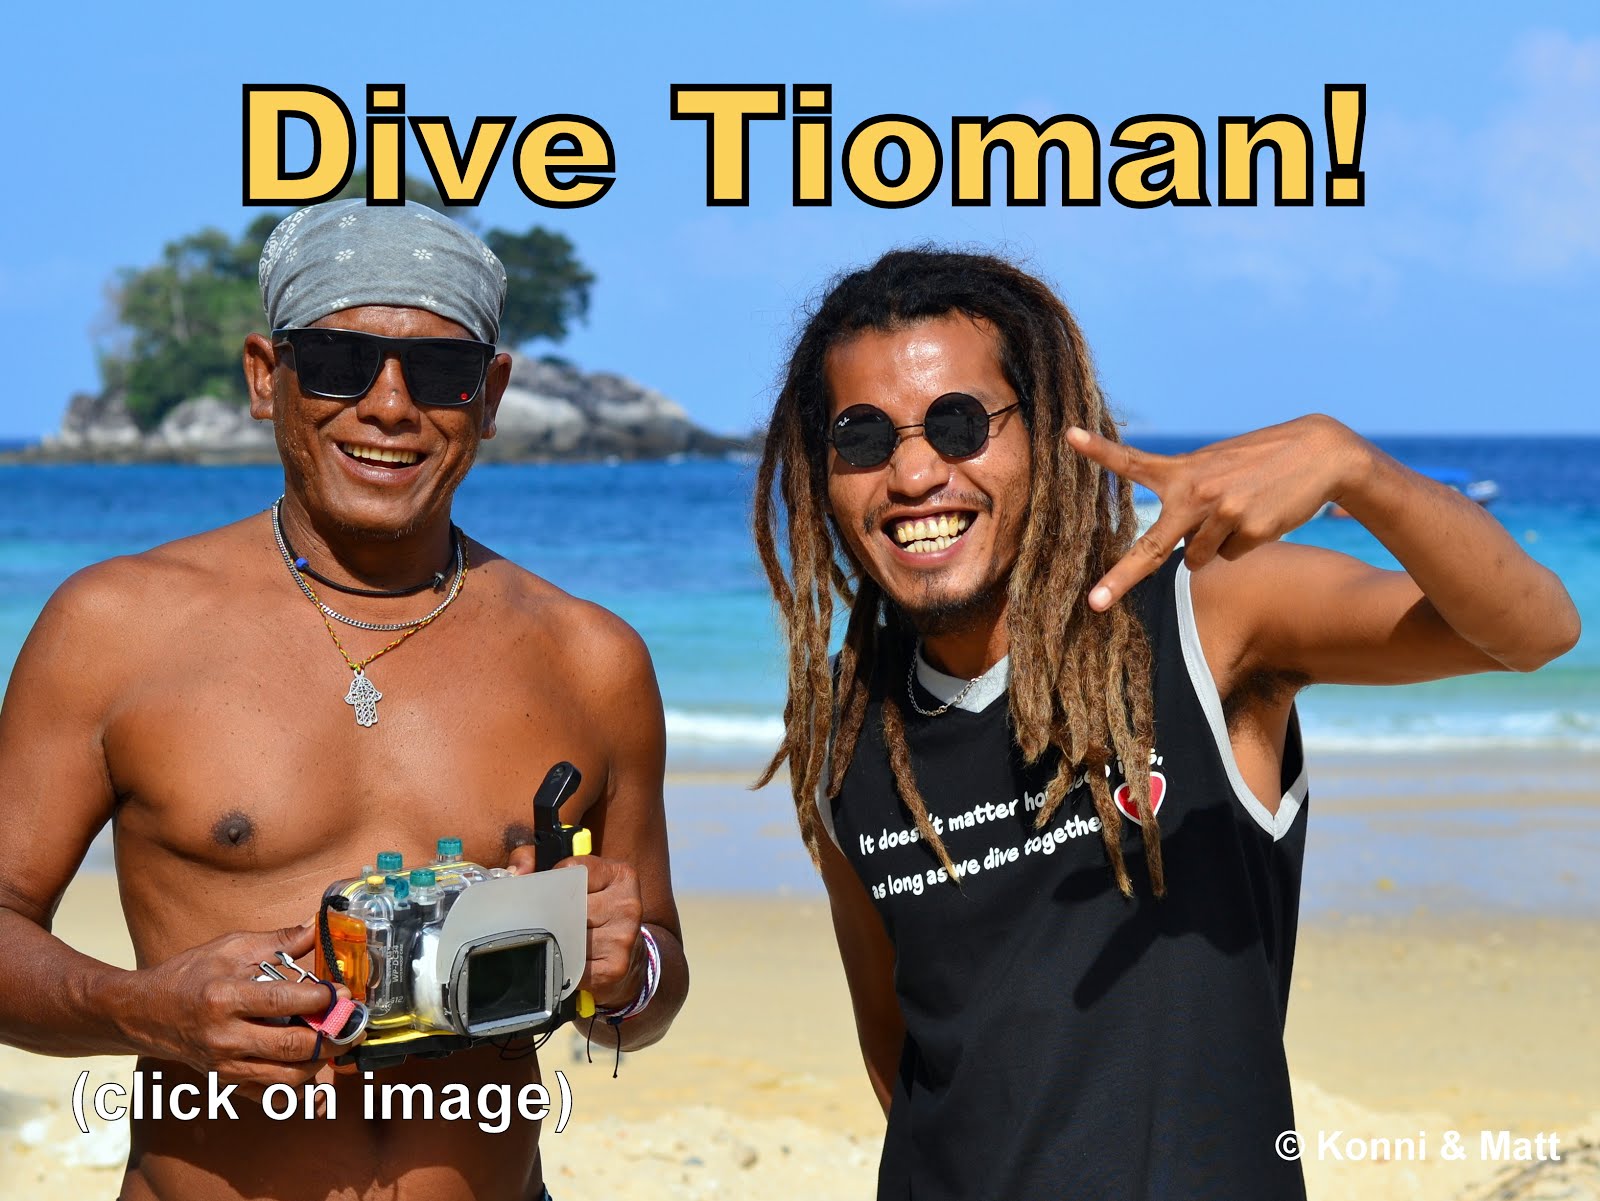 Dive Tioman - click on image for details